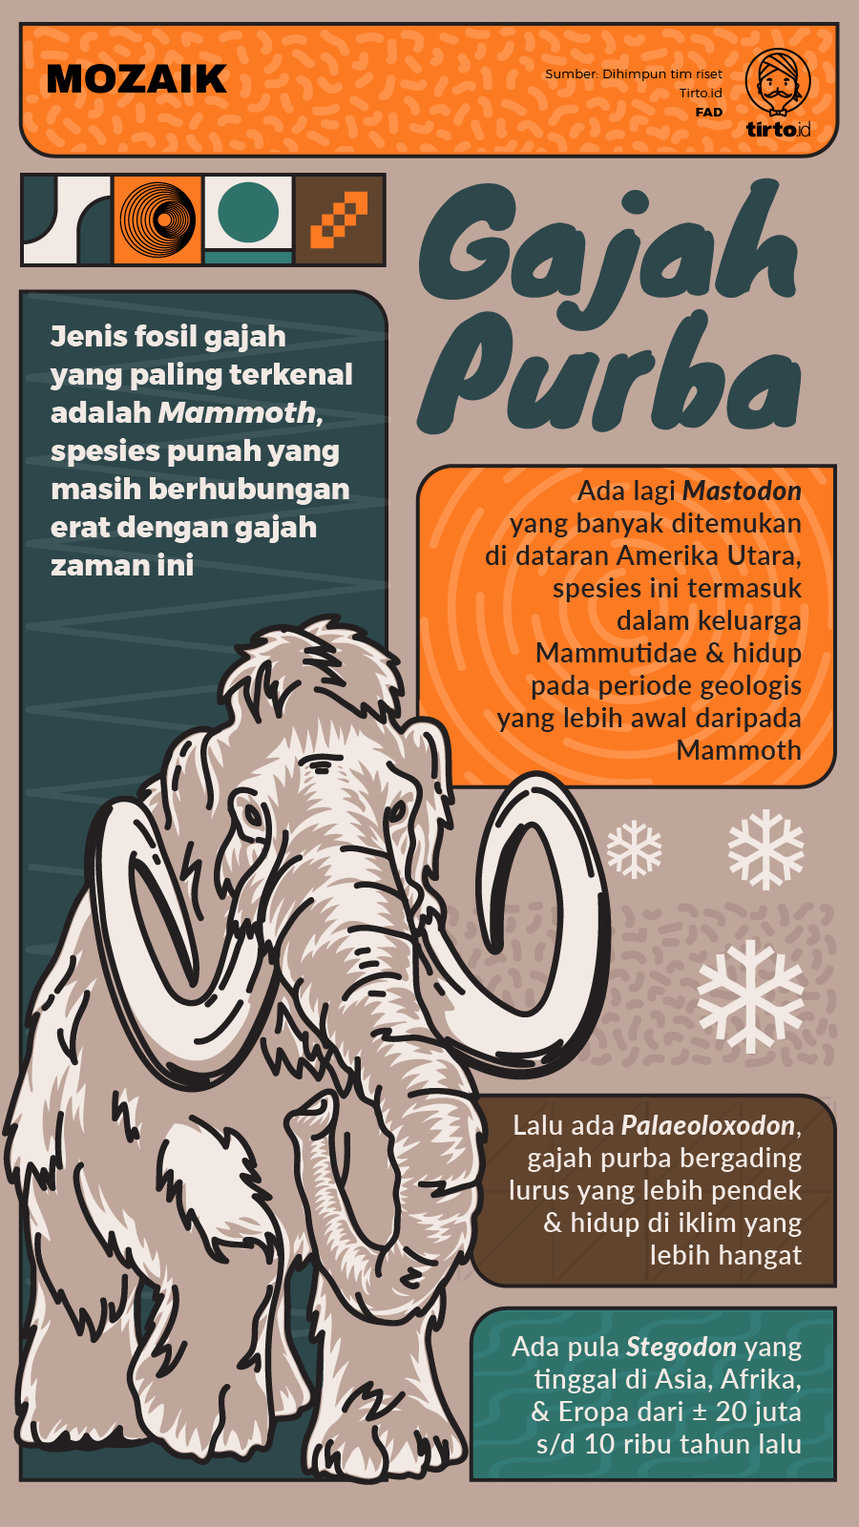 Infografik Mozaik Gajah Purba